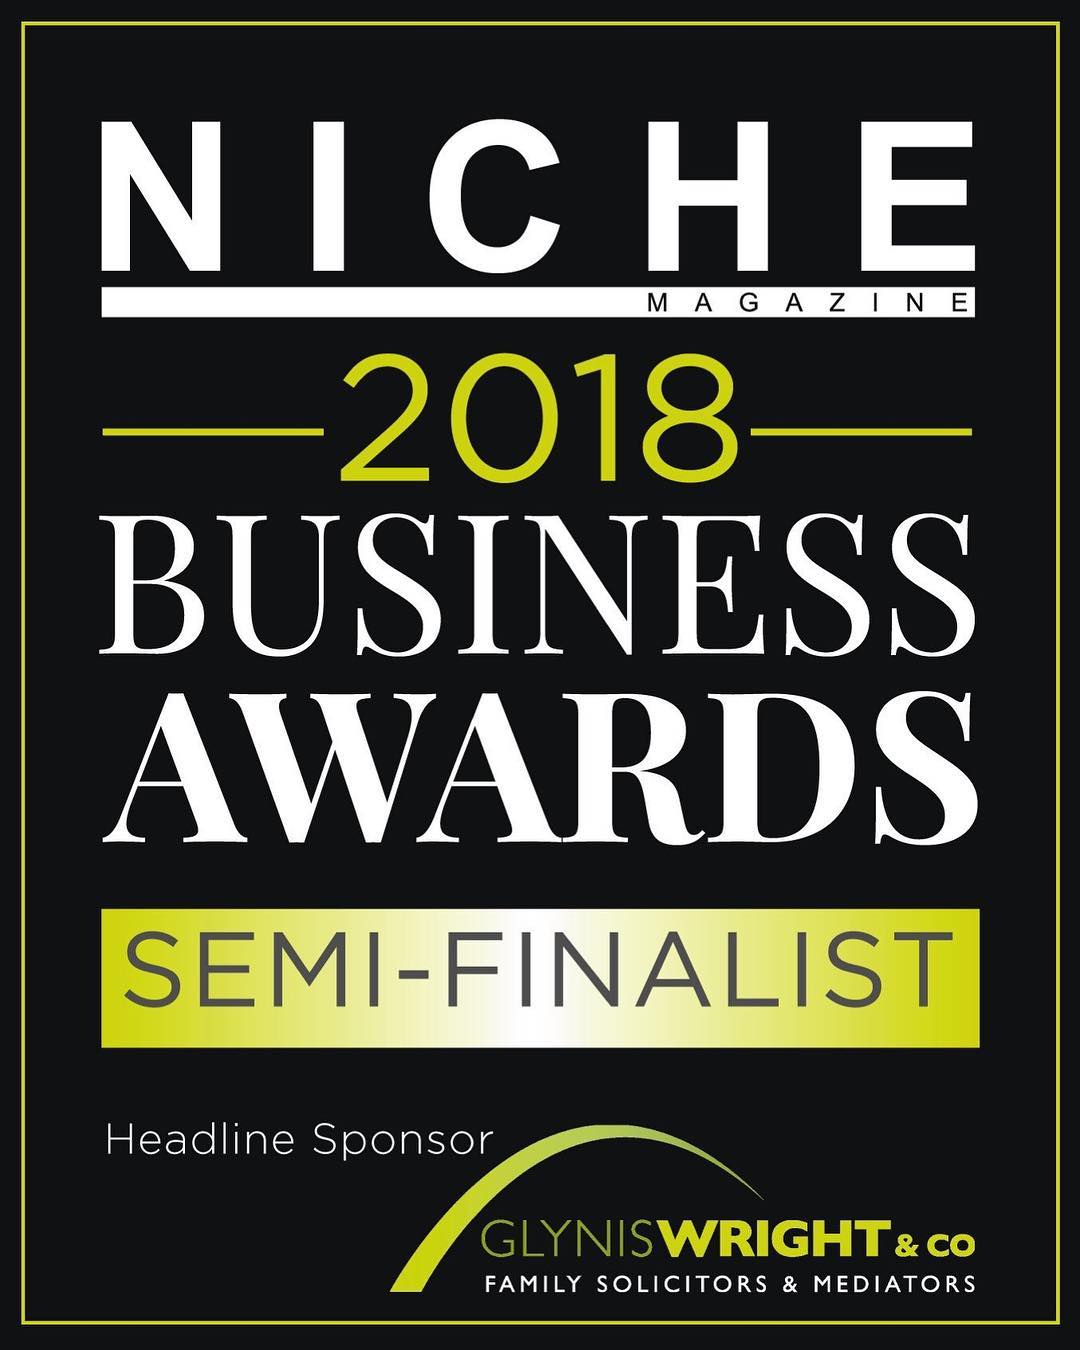 Niche 2018 business awards